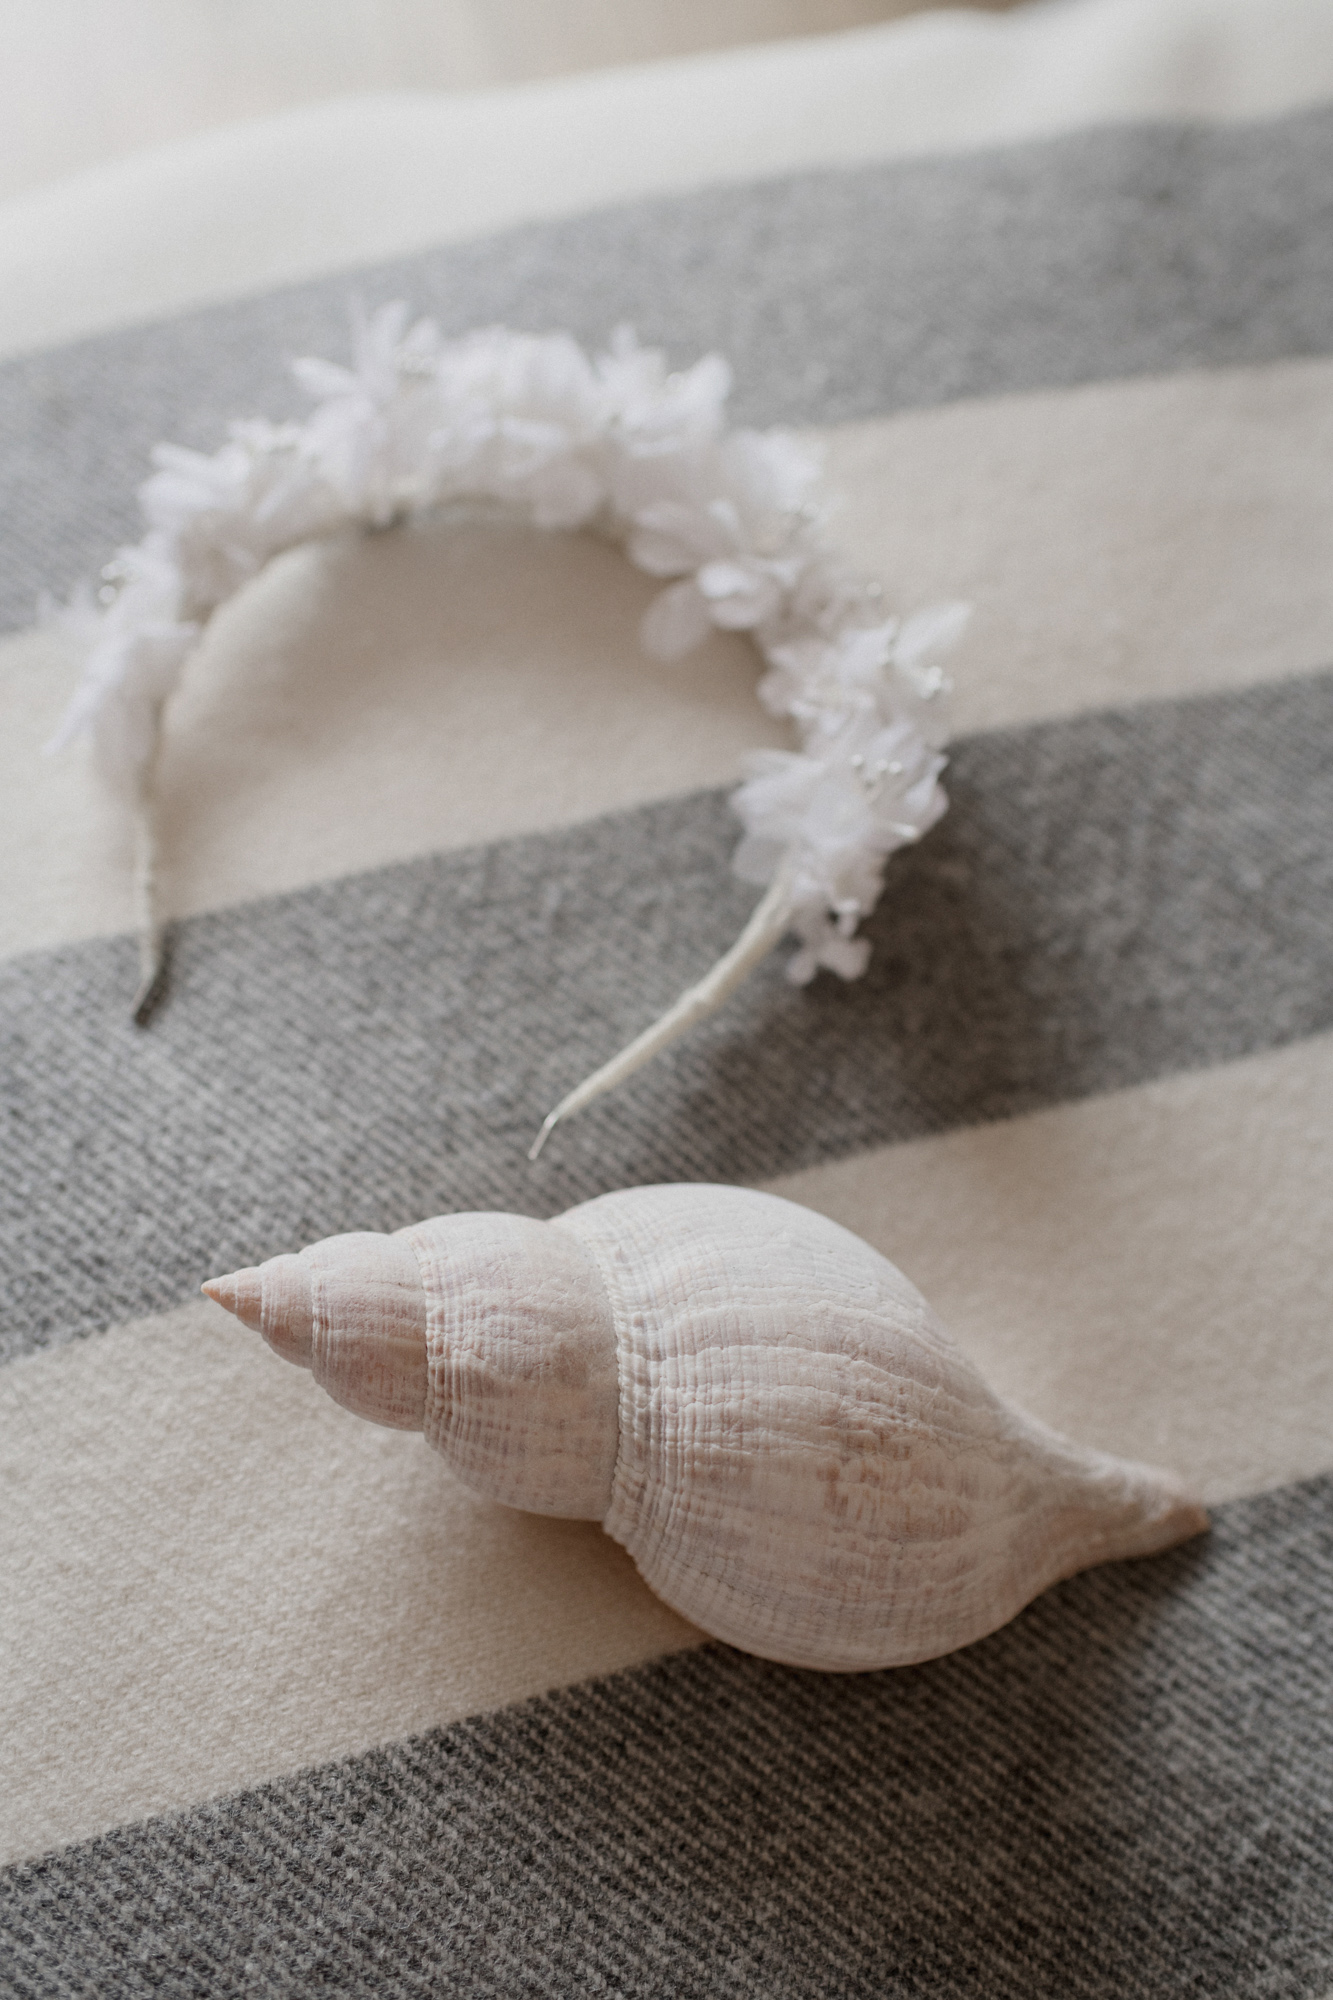 A shell next to a pretty floral headband.